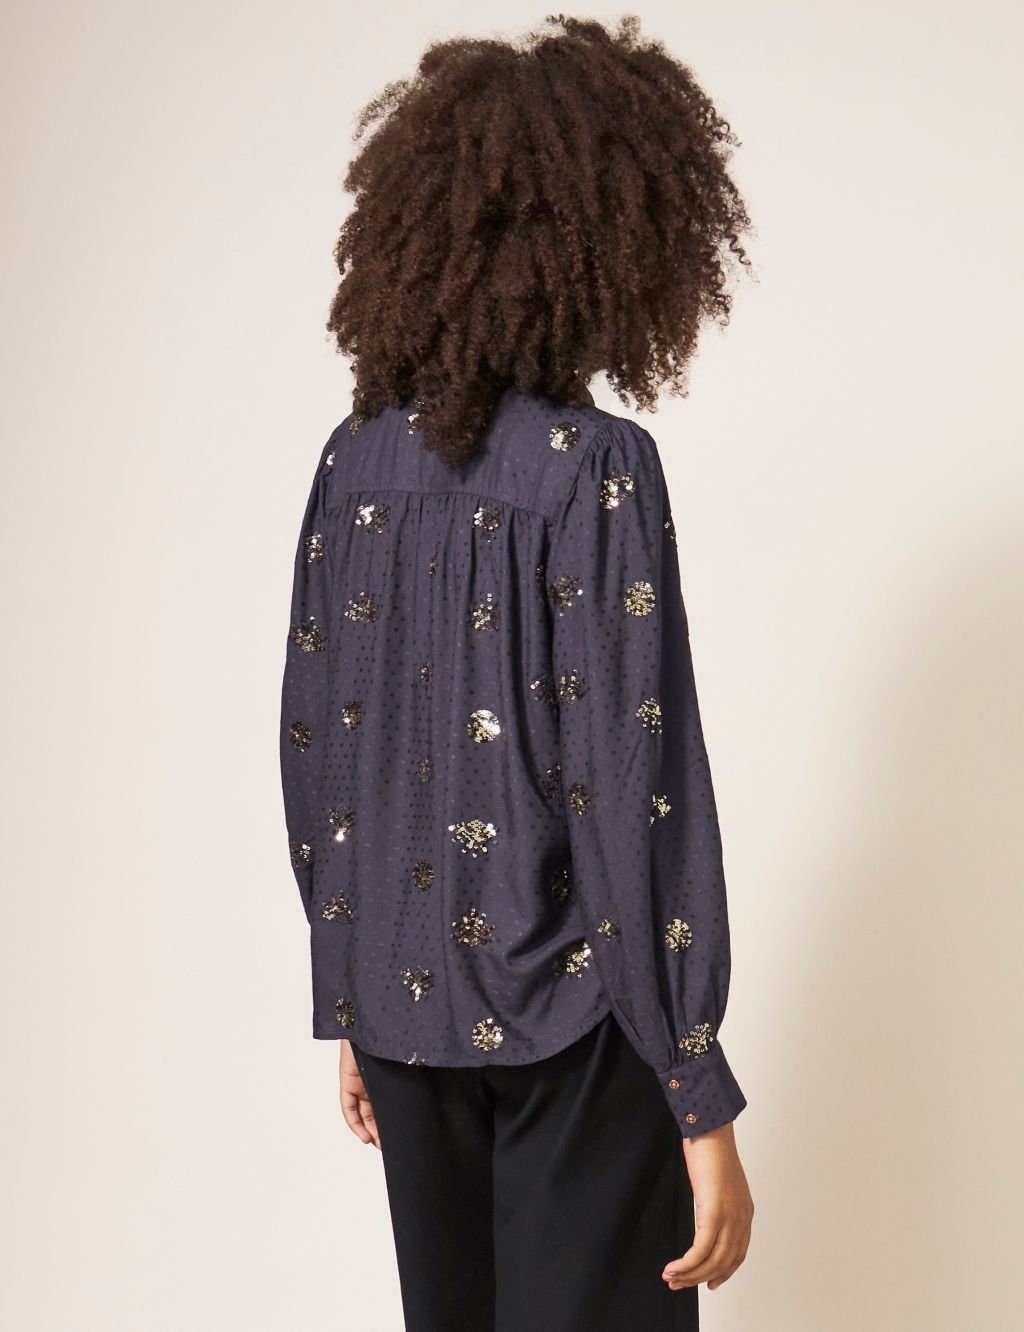 Sequin Embellished Collared Shirt image 4